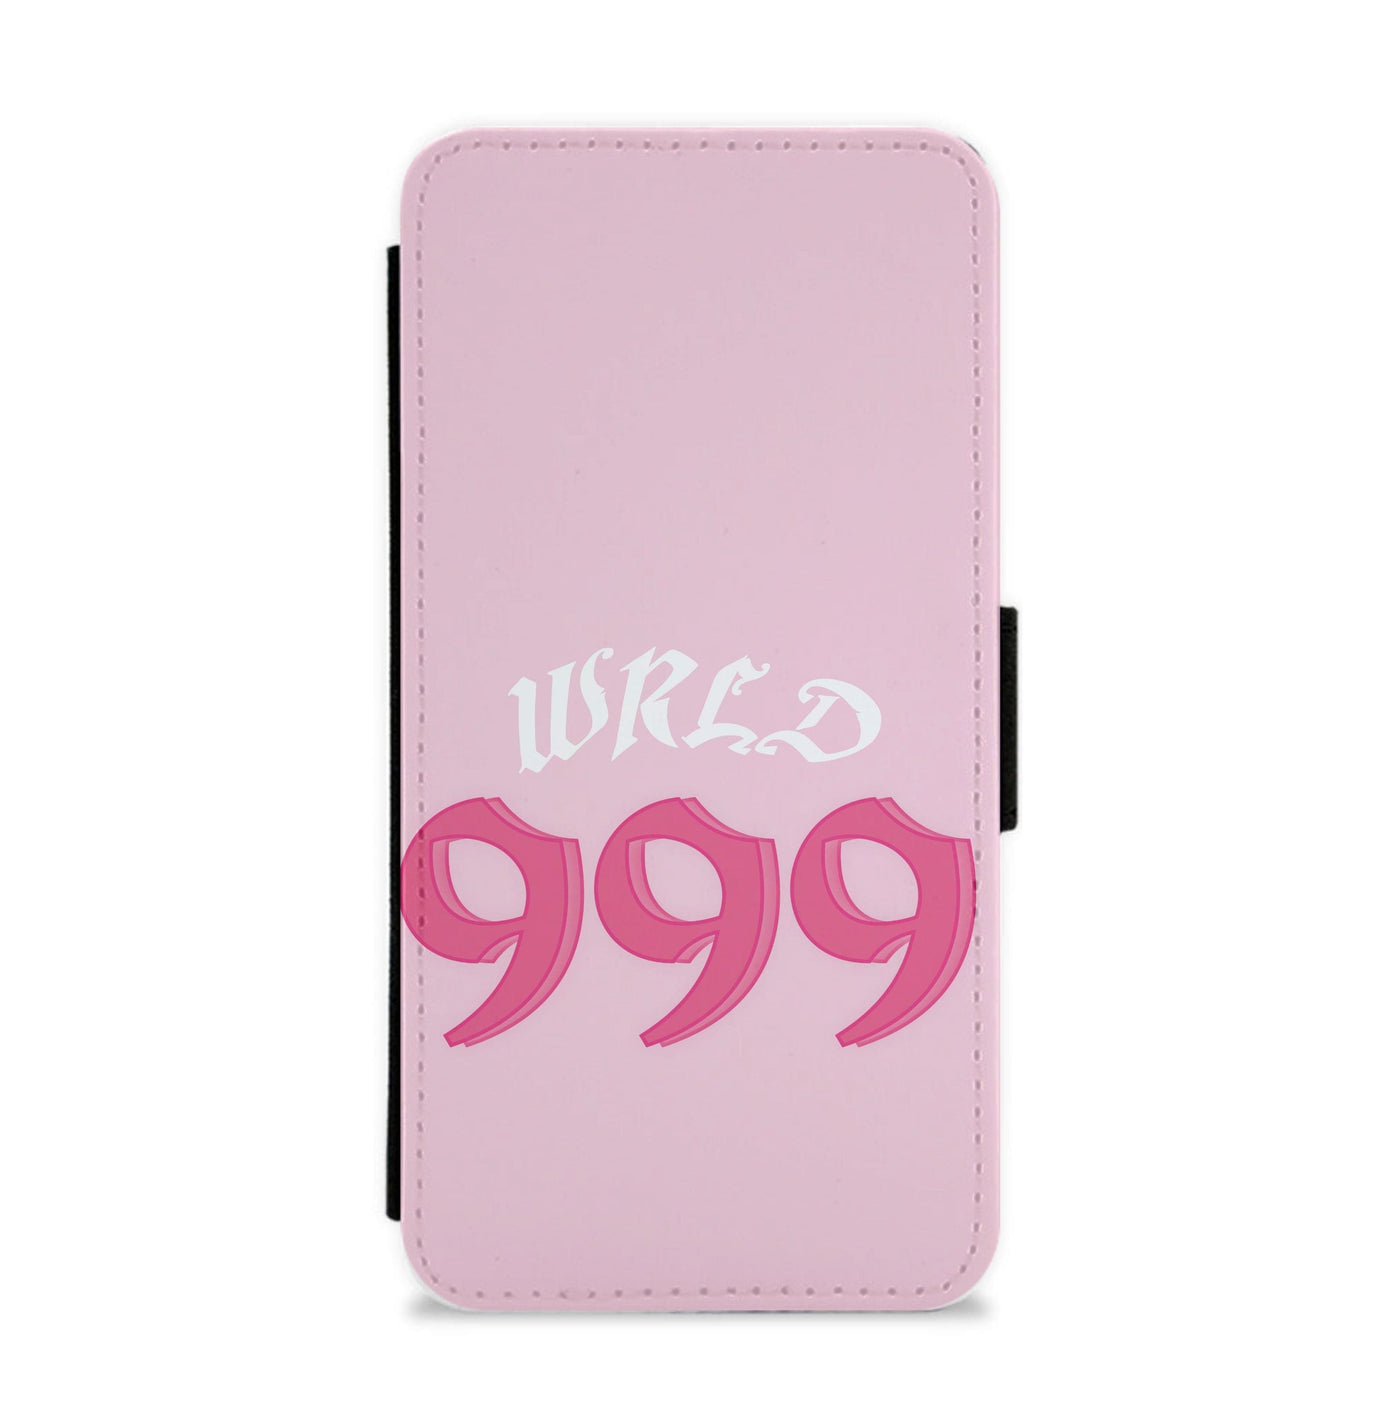 WRLD 999 - Juice WRLD Flip / Wallet Phone Case